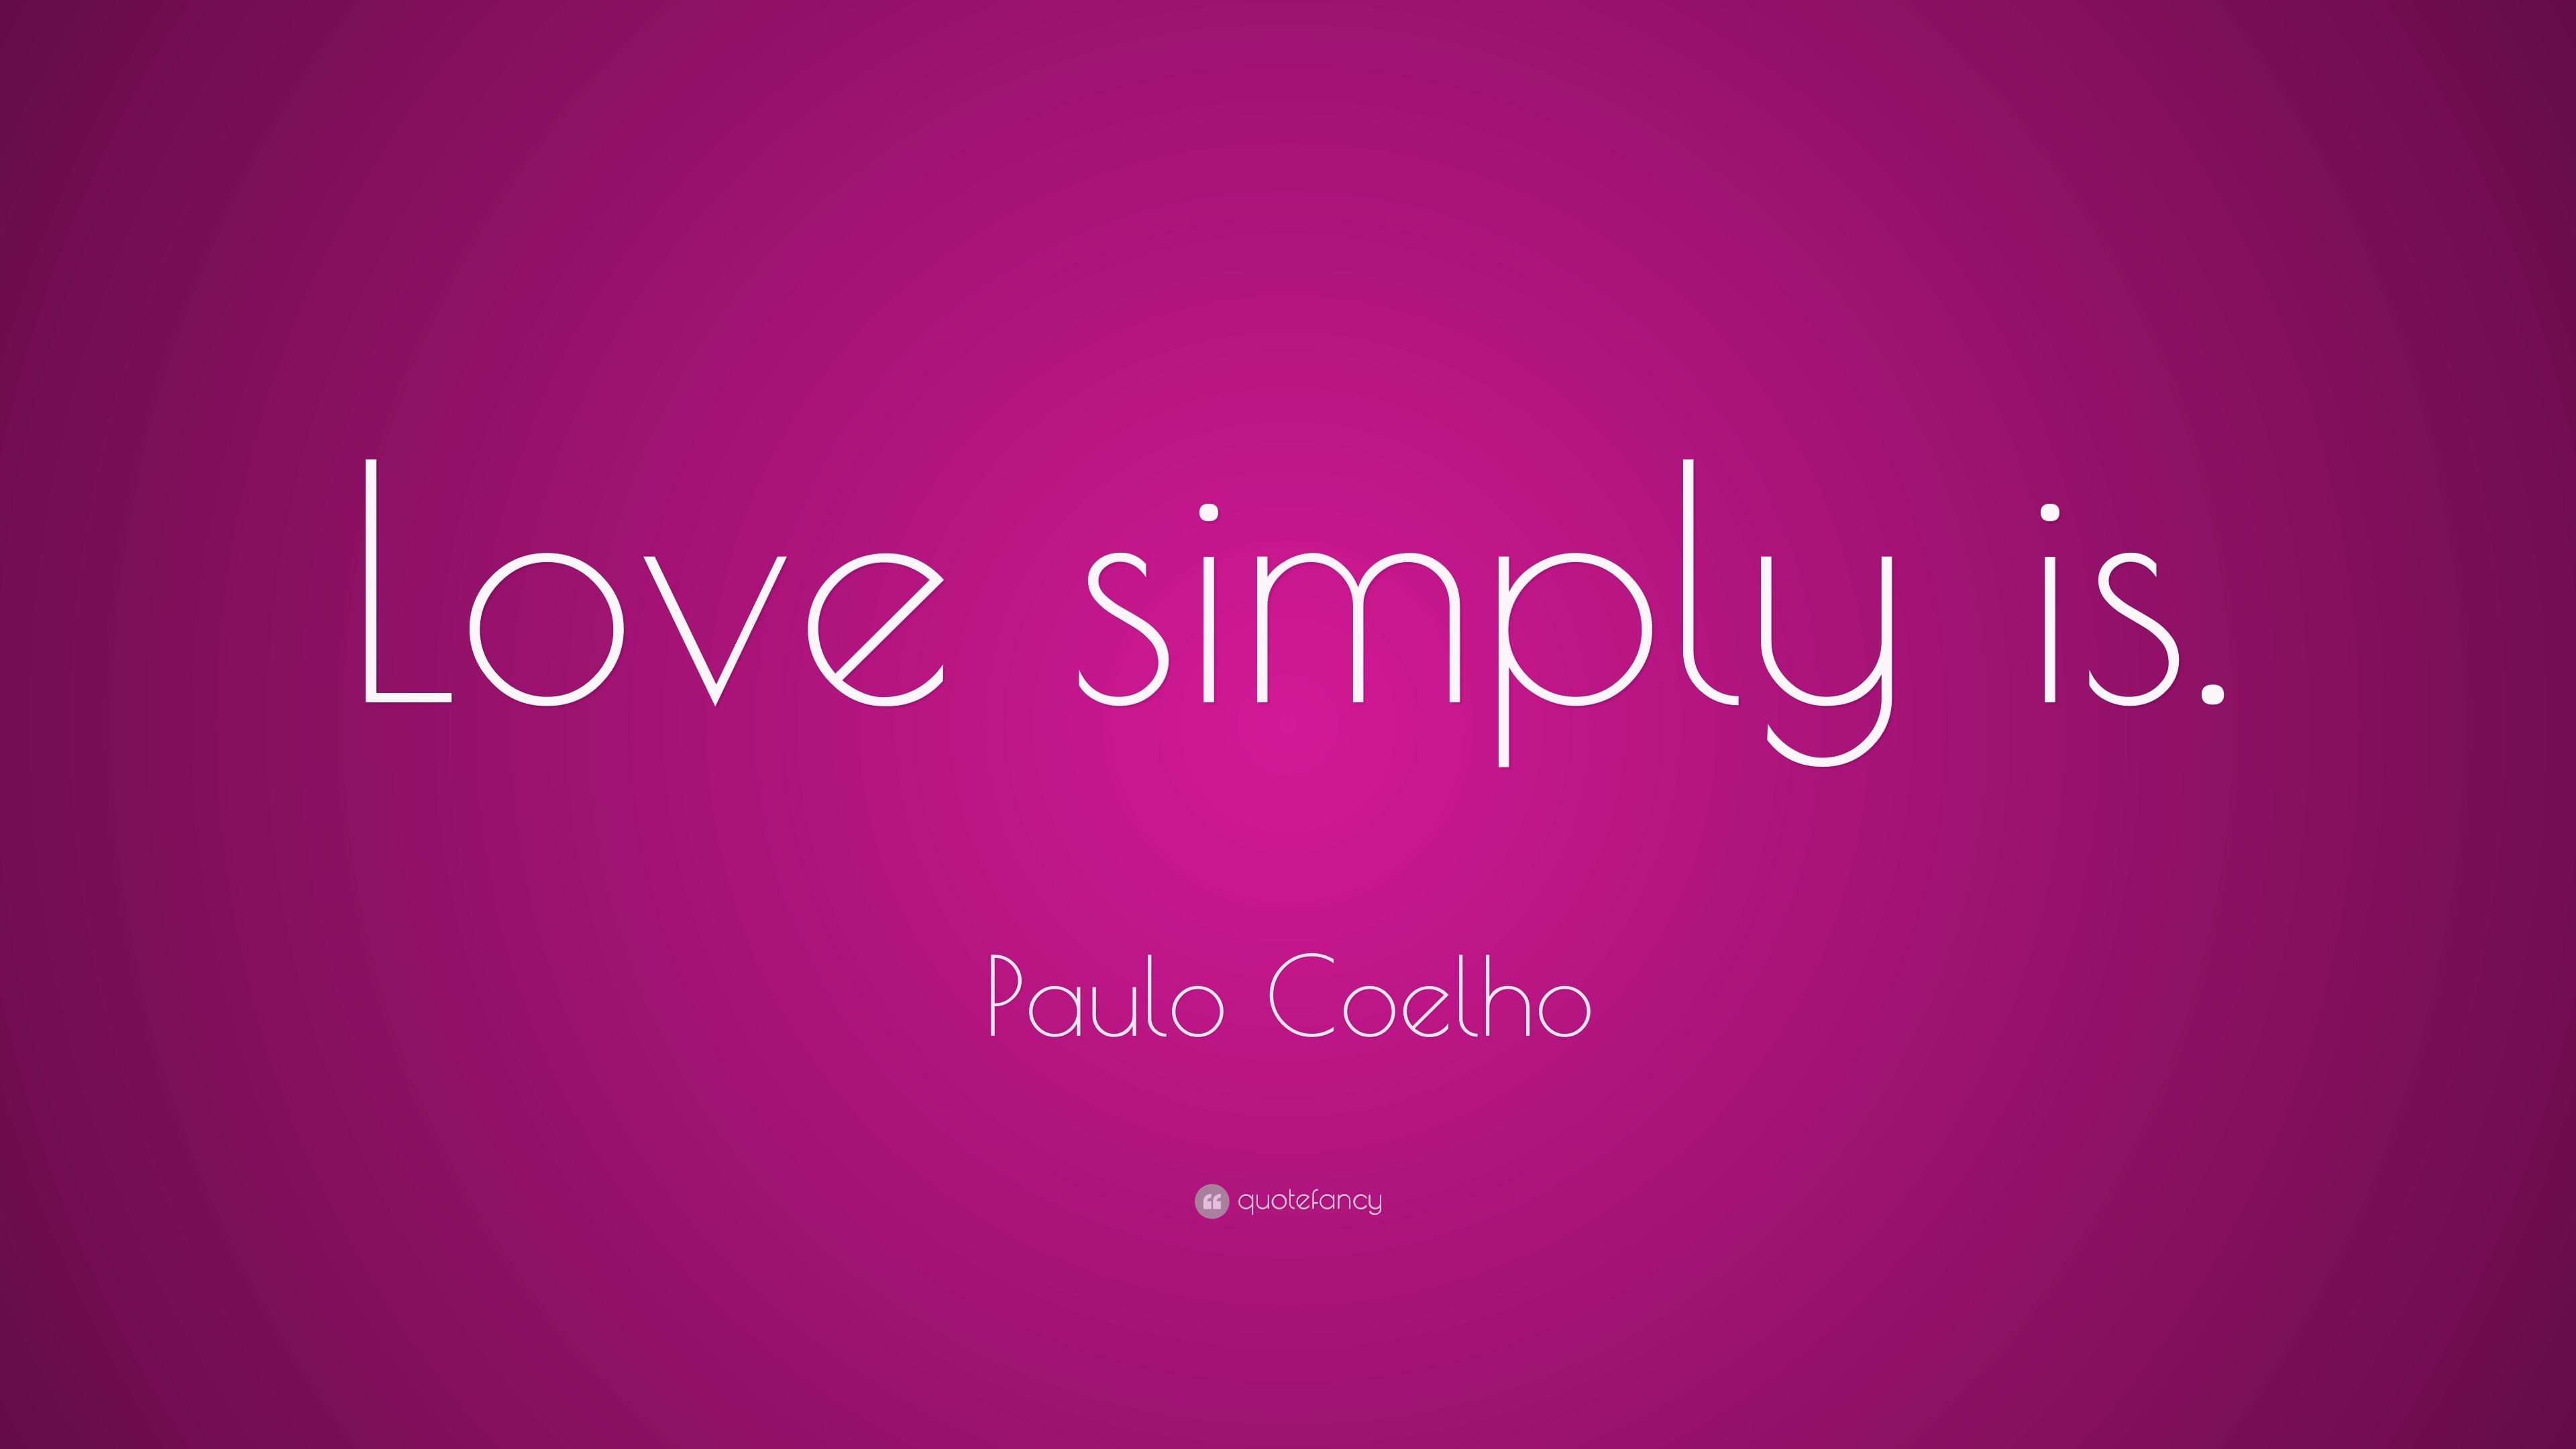 Paulo Coelho Quote: “Love simply is.”